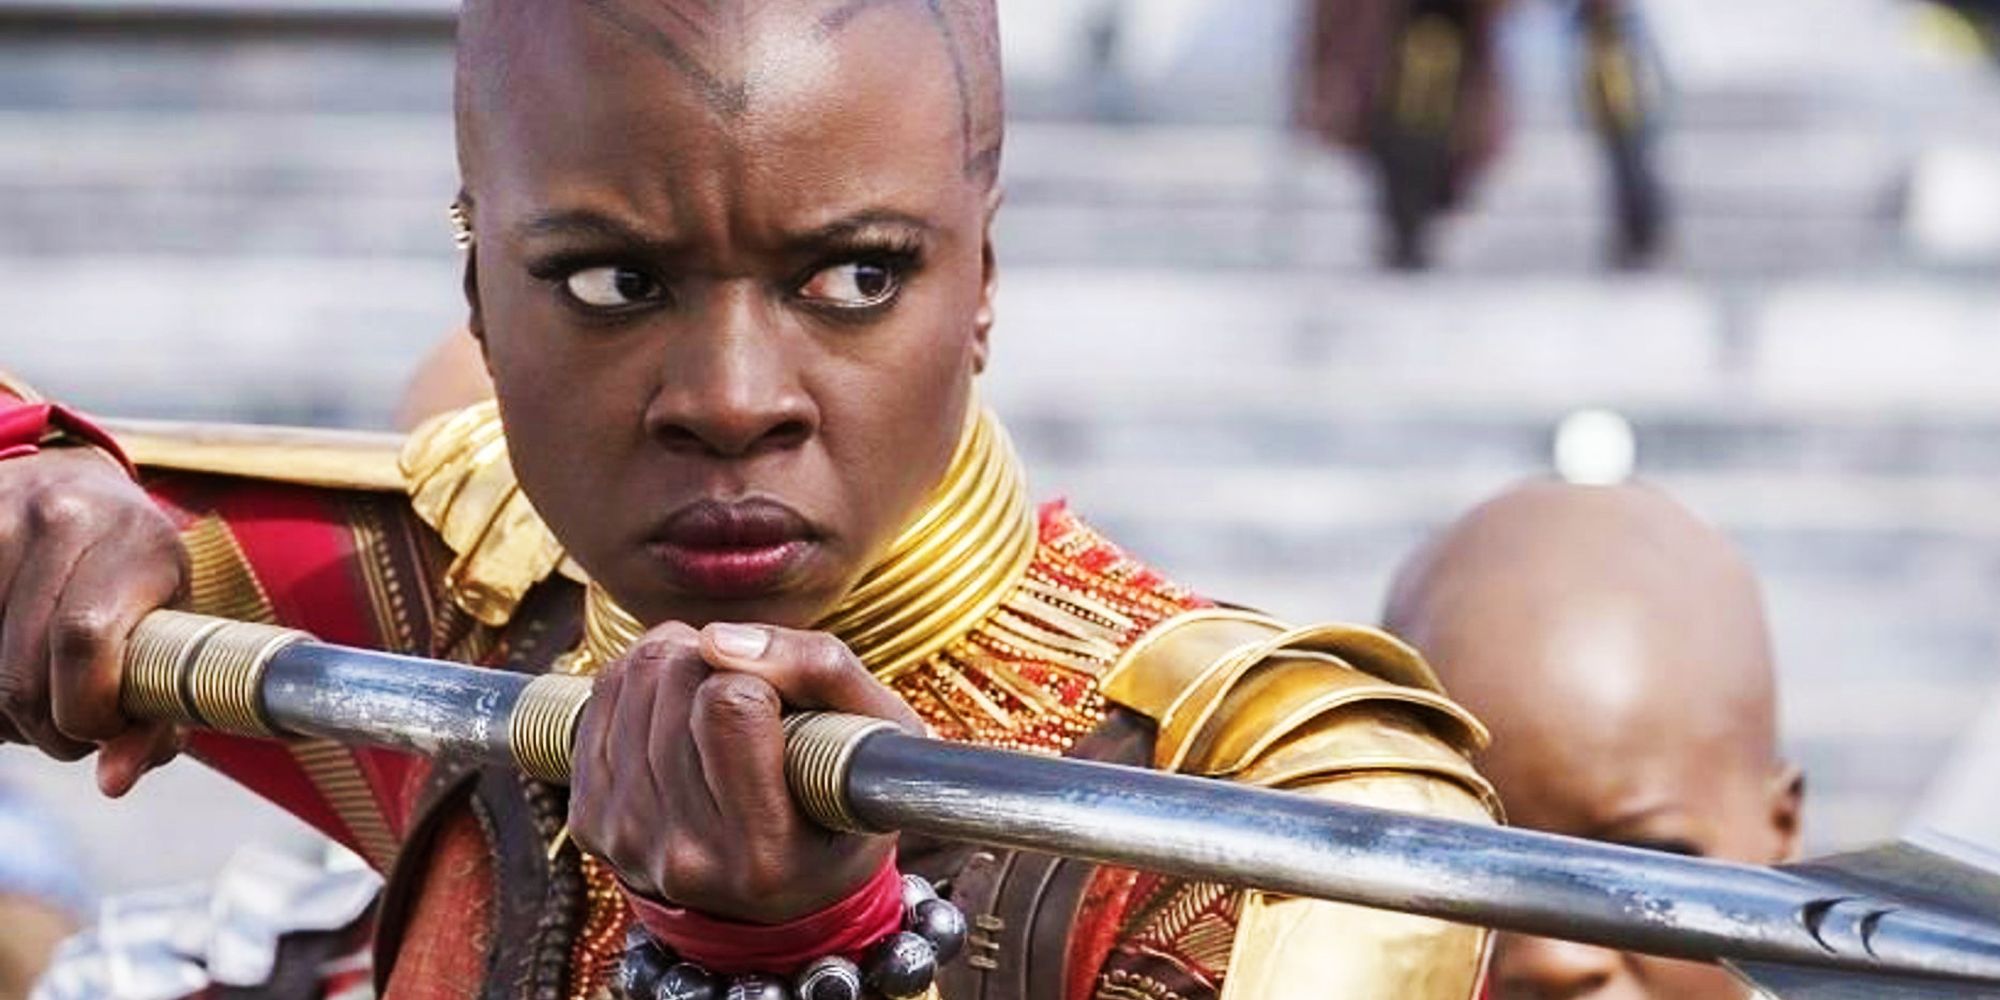 Okoye readies her spear in the MCU's Black Panther